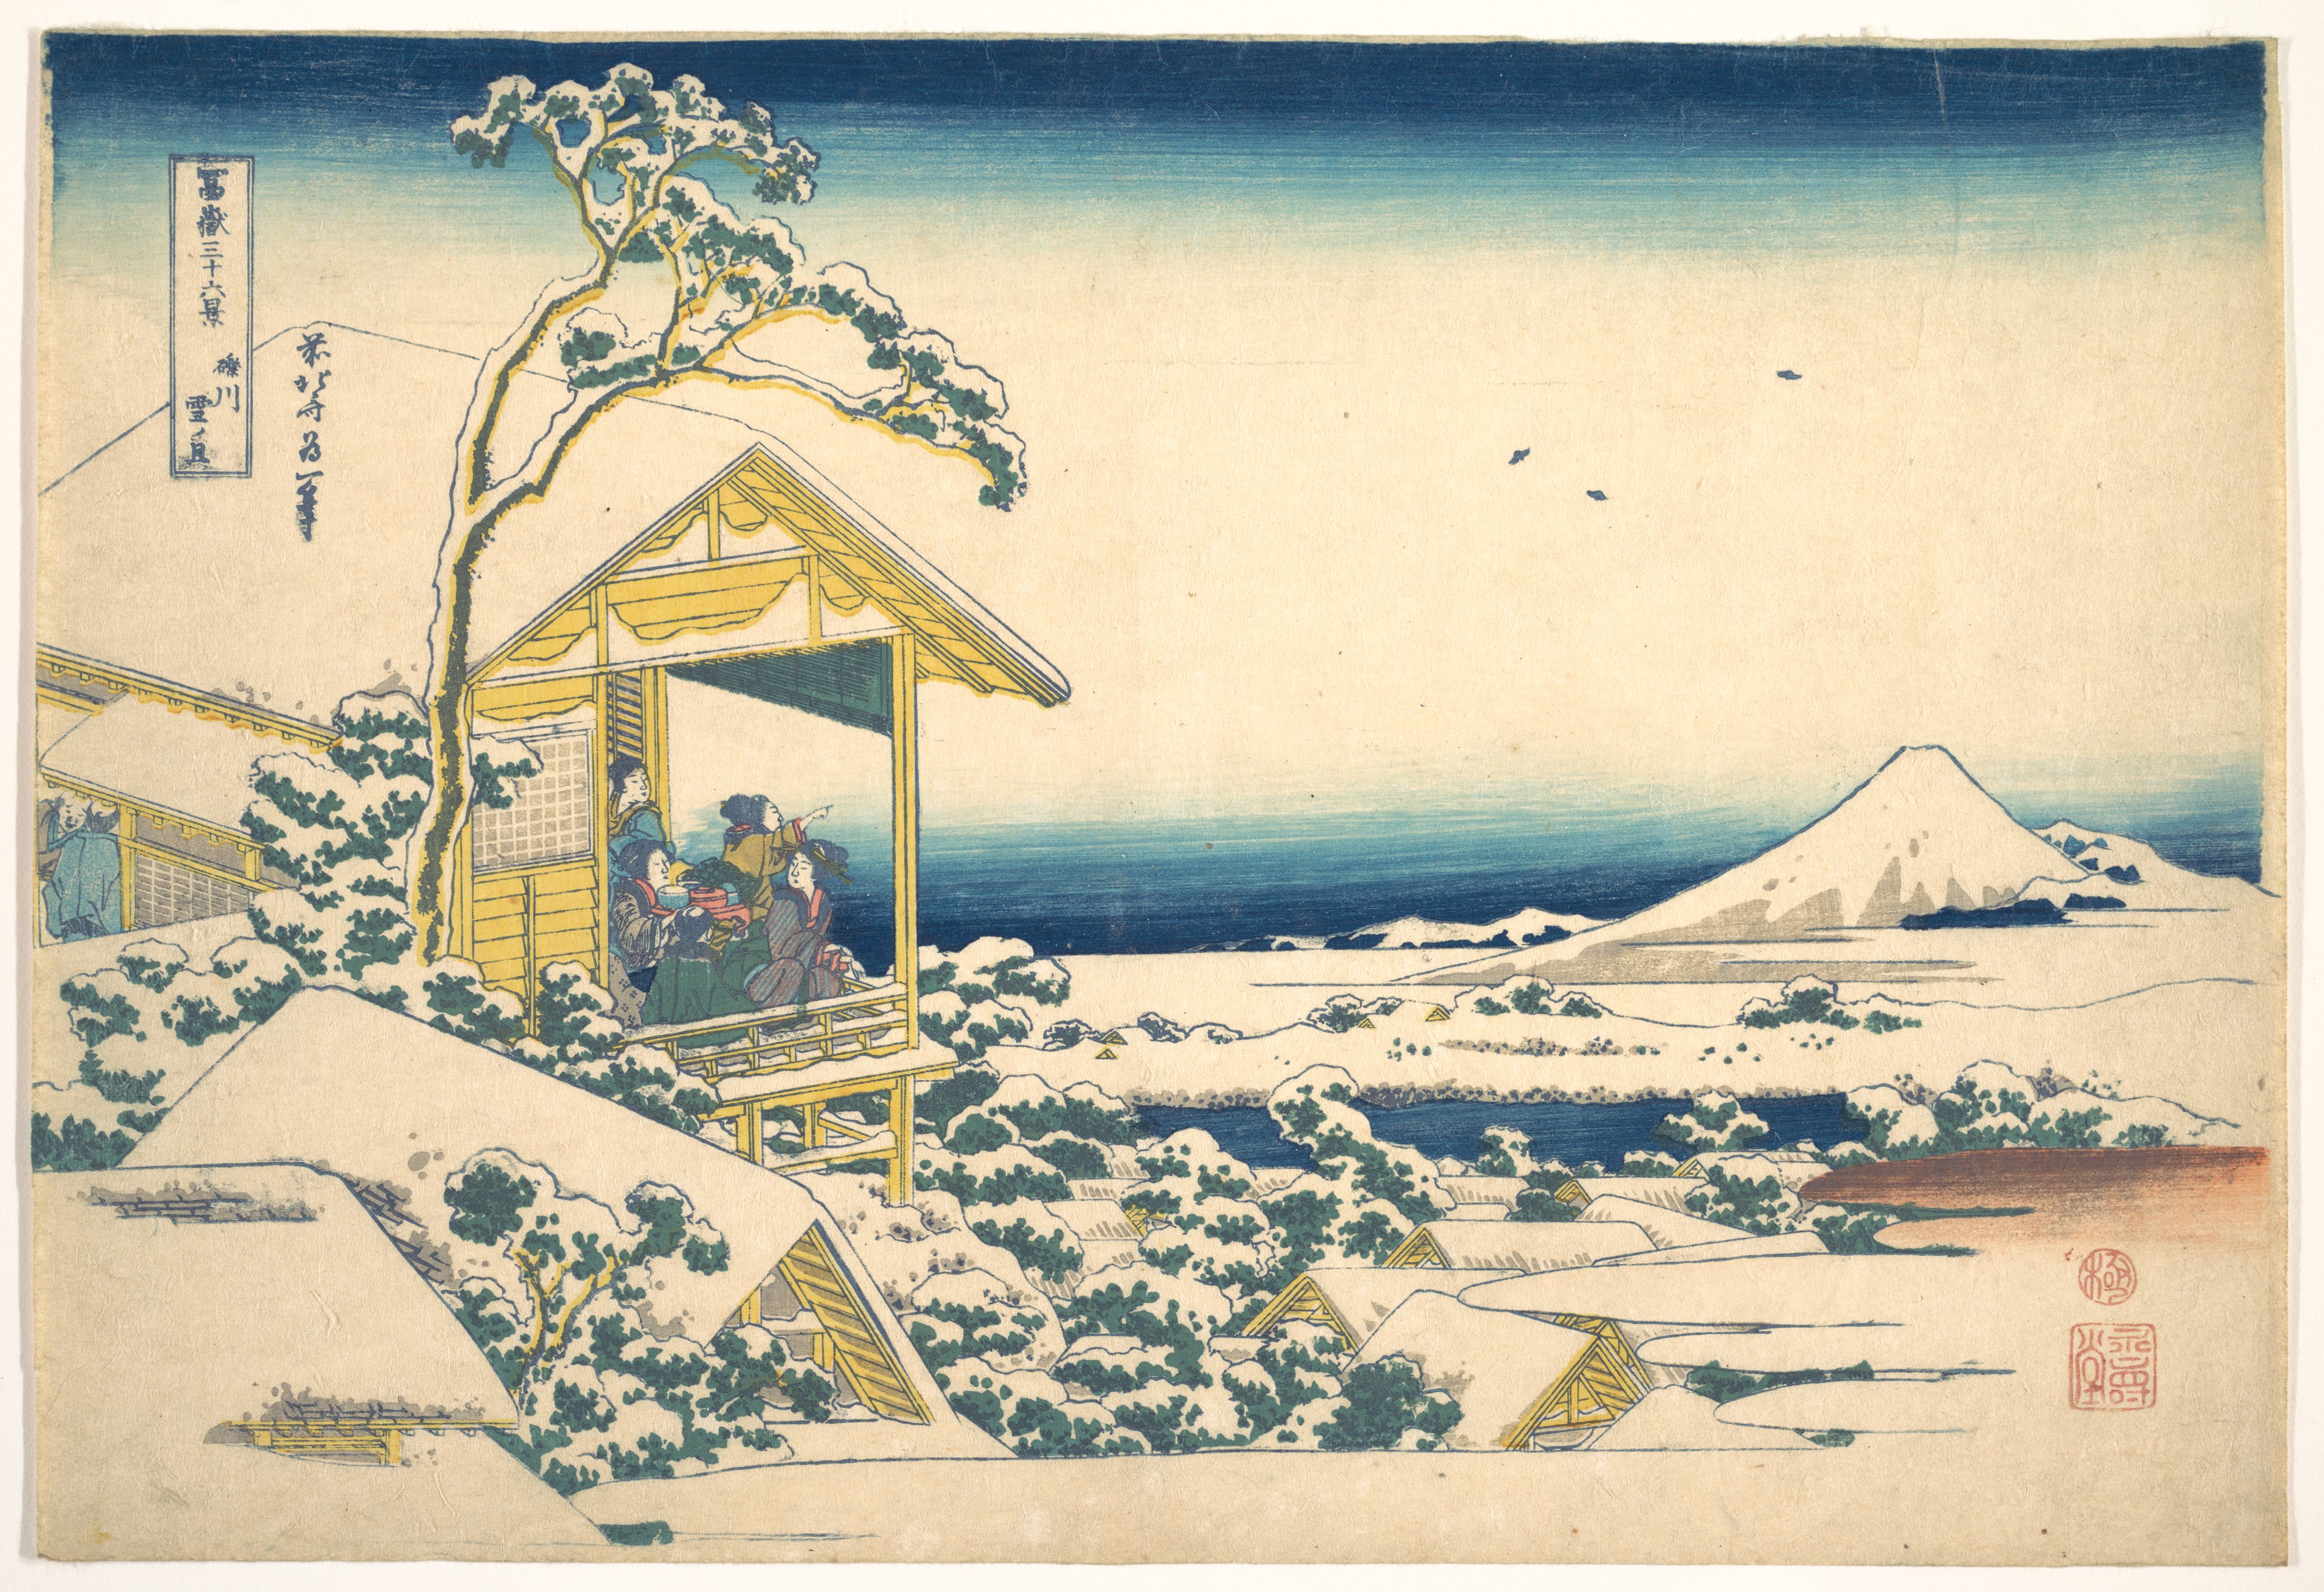 Katsushika Hokusai. Morning after the Snow at Koishikawa in Edo, from the series Thirty-six Views of Mount Fuji